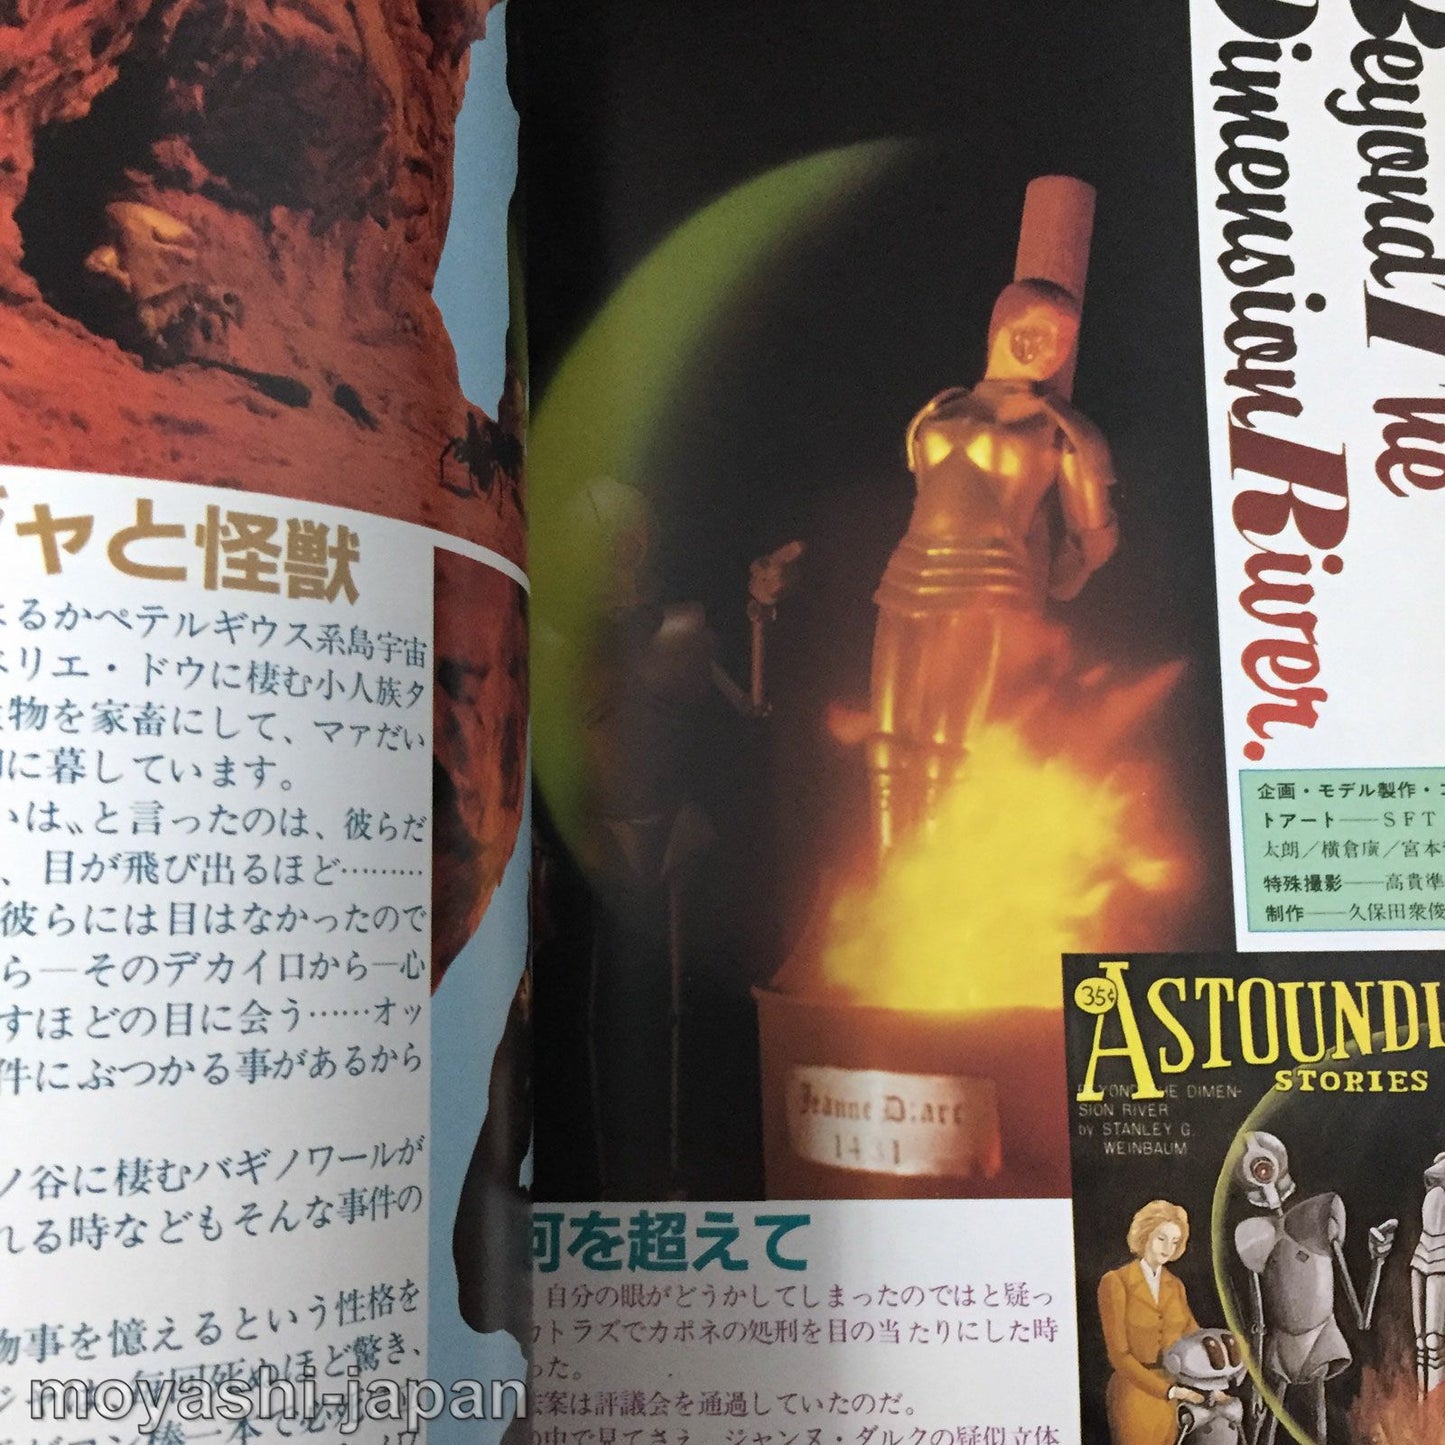 Uchusen Magazine Vol.18 June 1984